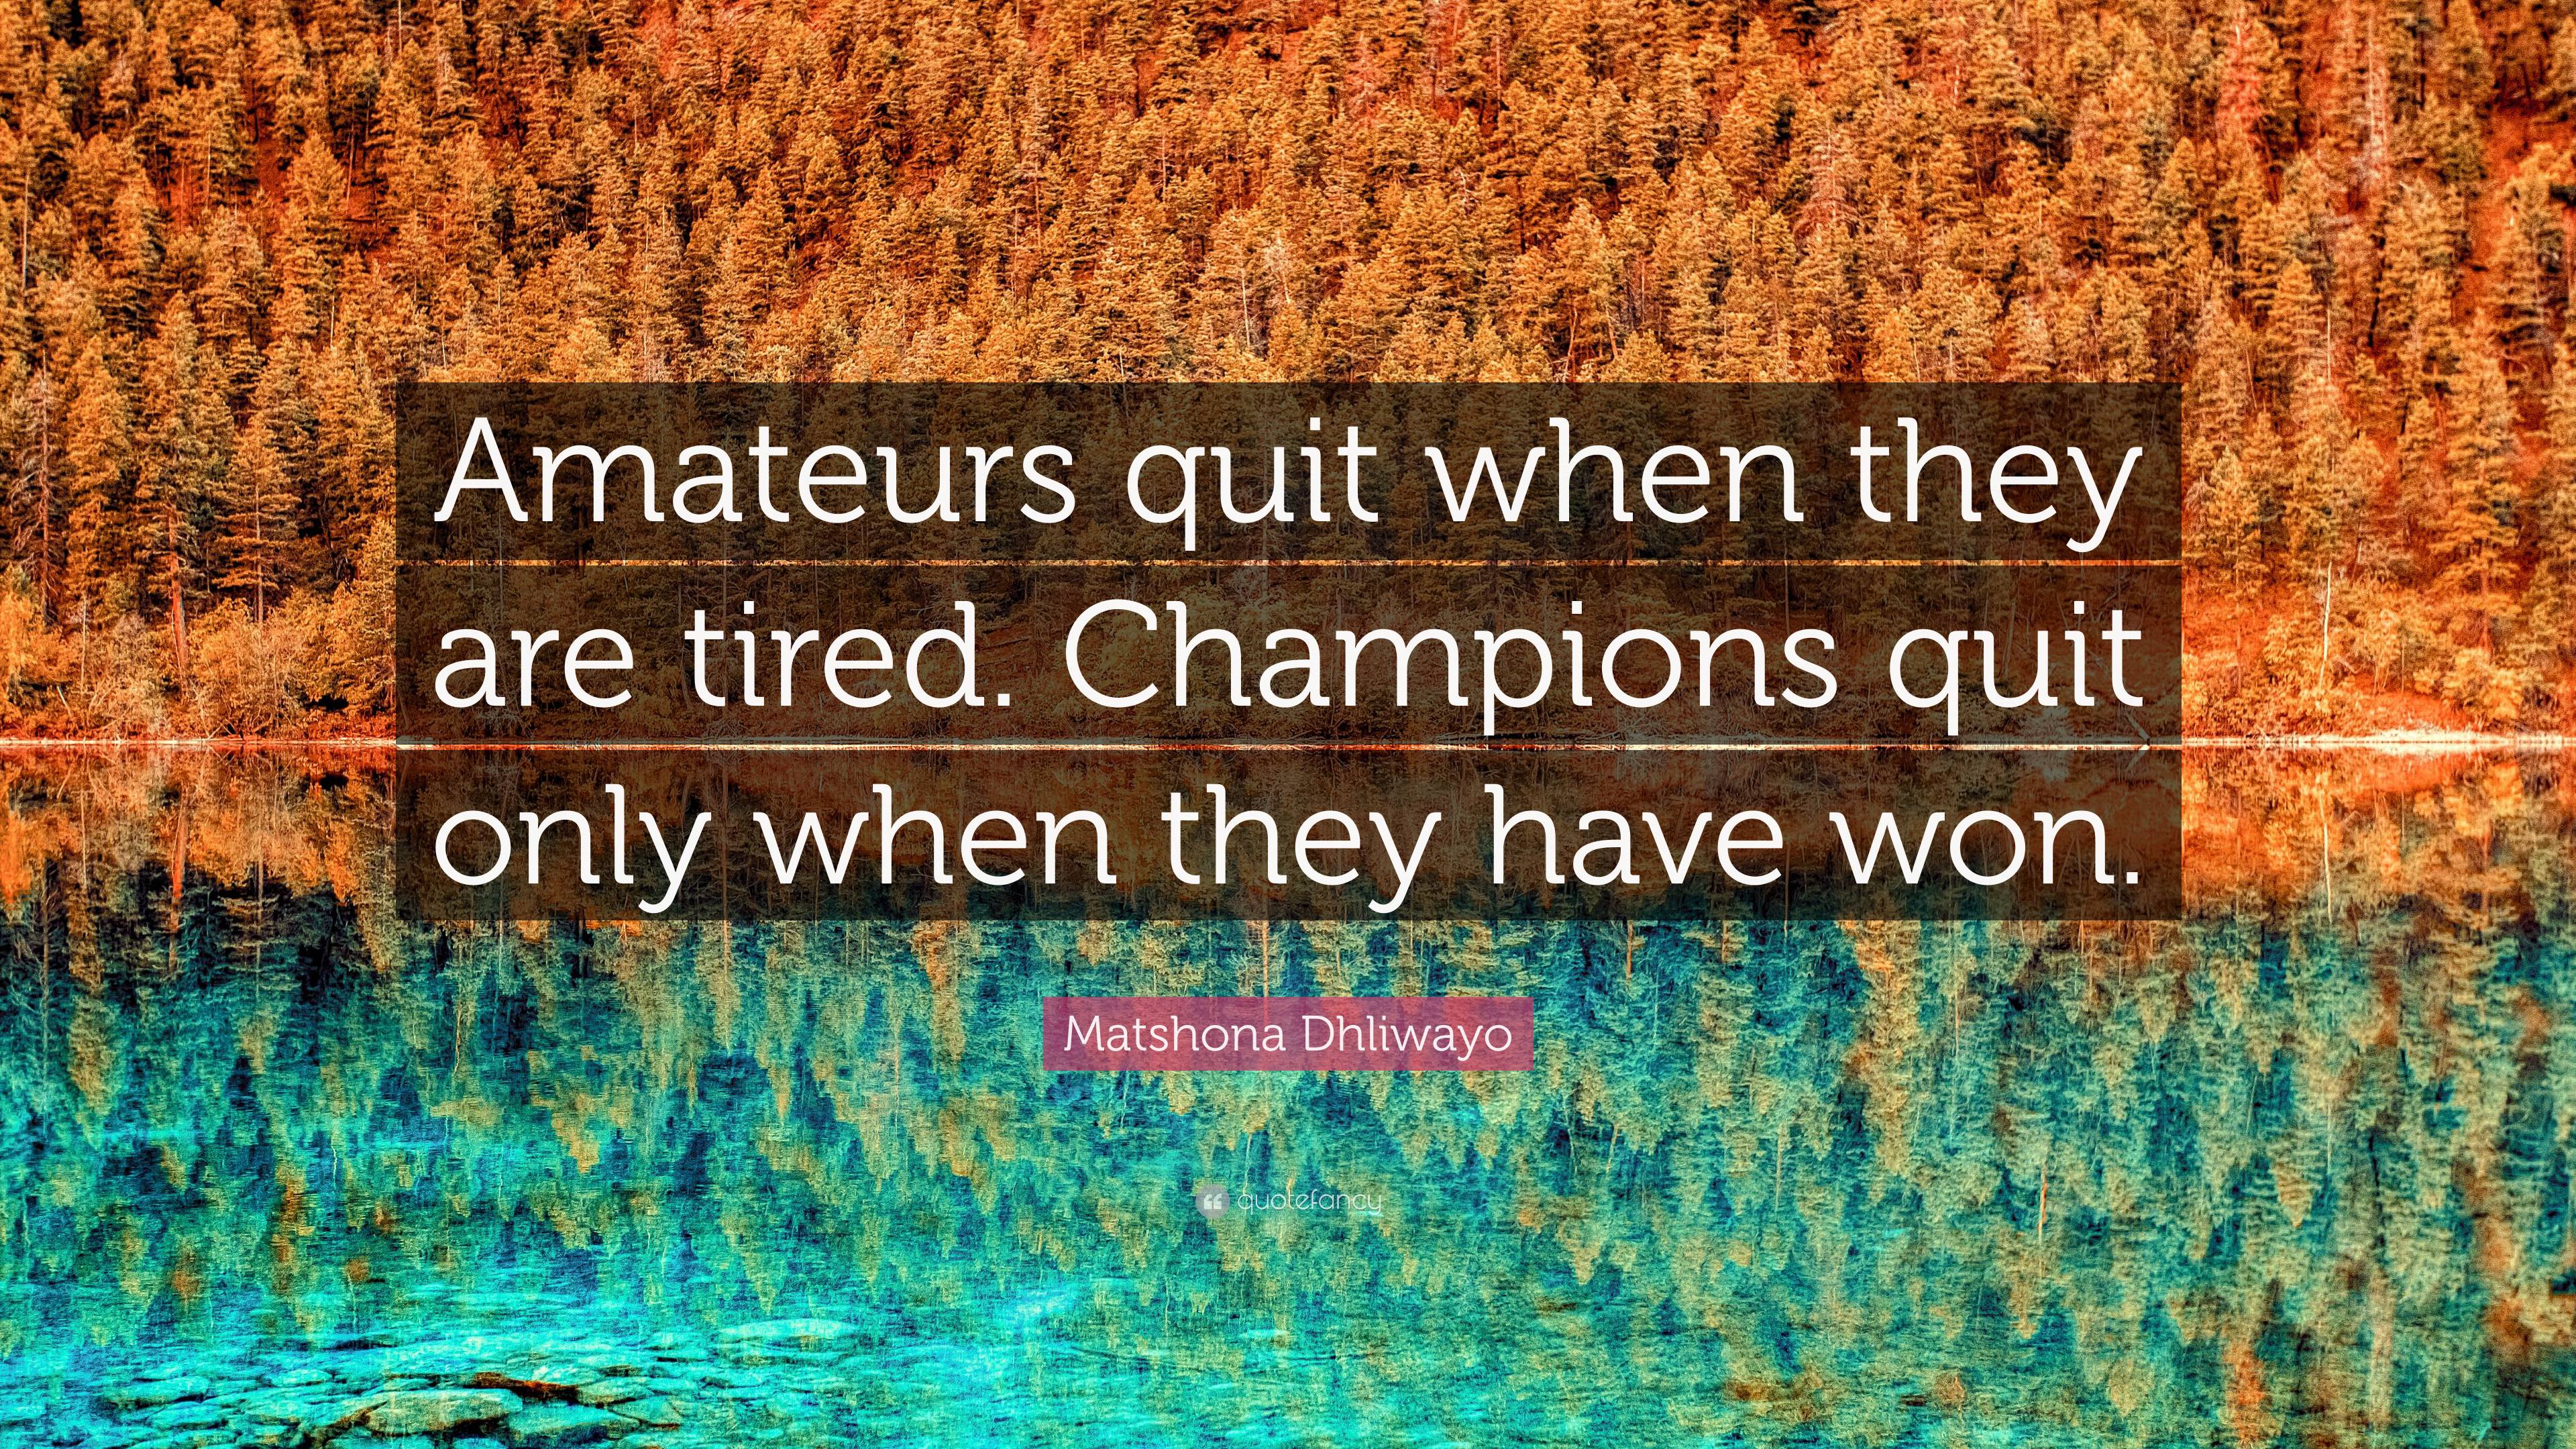 Matshona Dhliwayo Quote: “Learn like an amateur. Train like a champion. Fight  like a warrior. Triumph